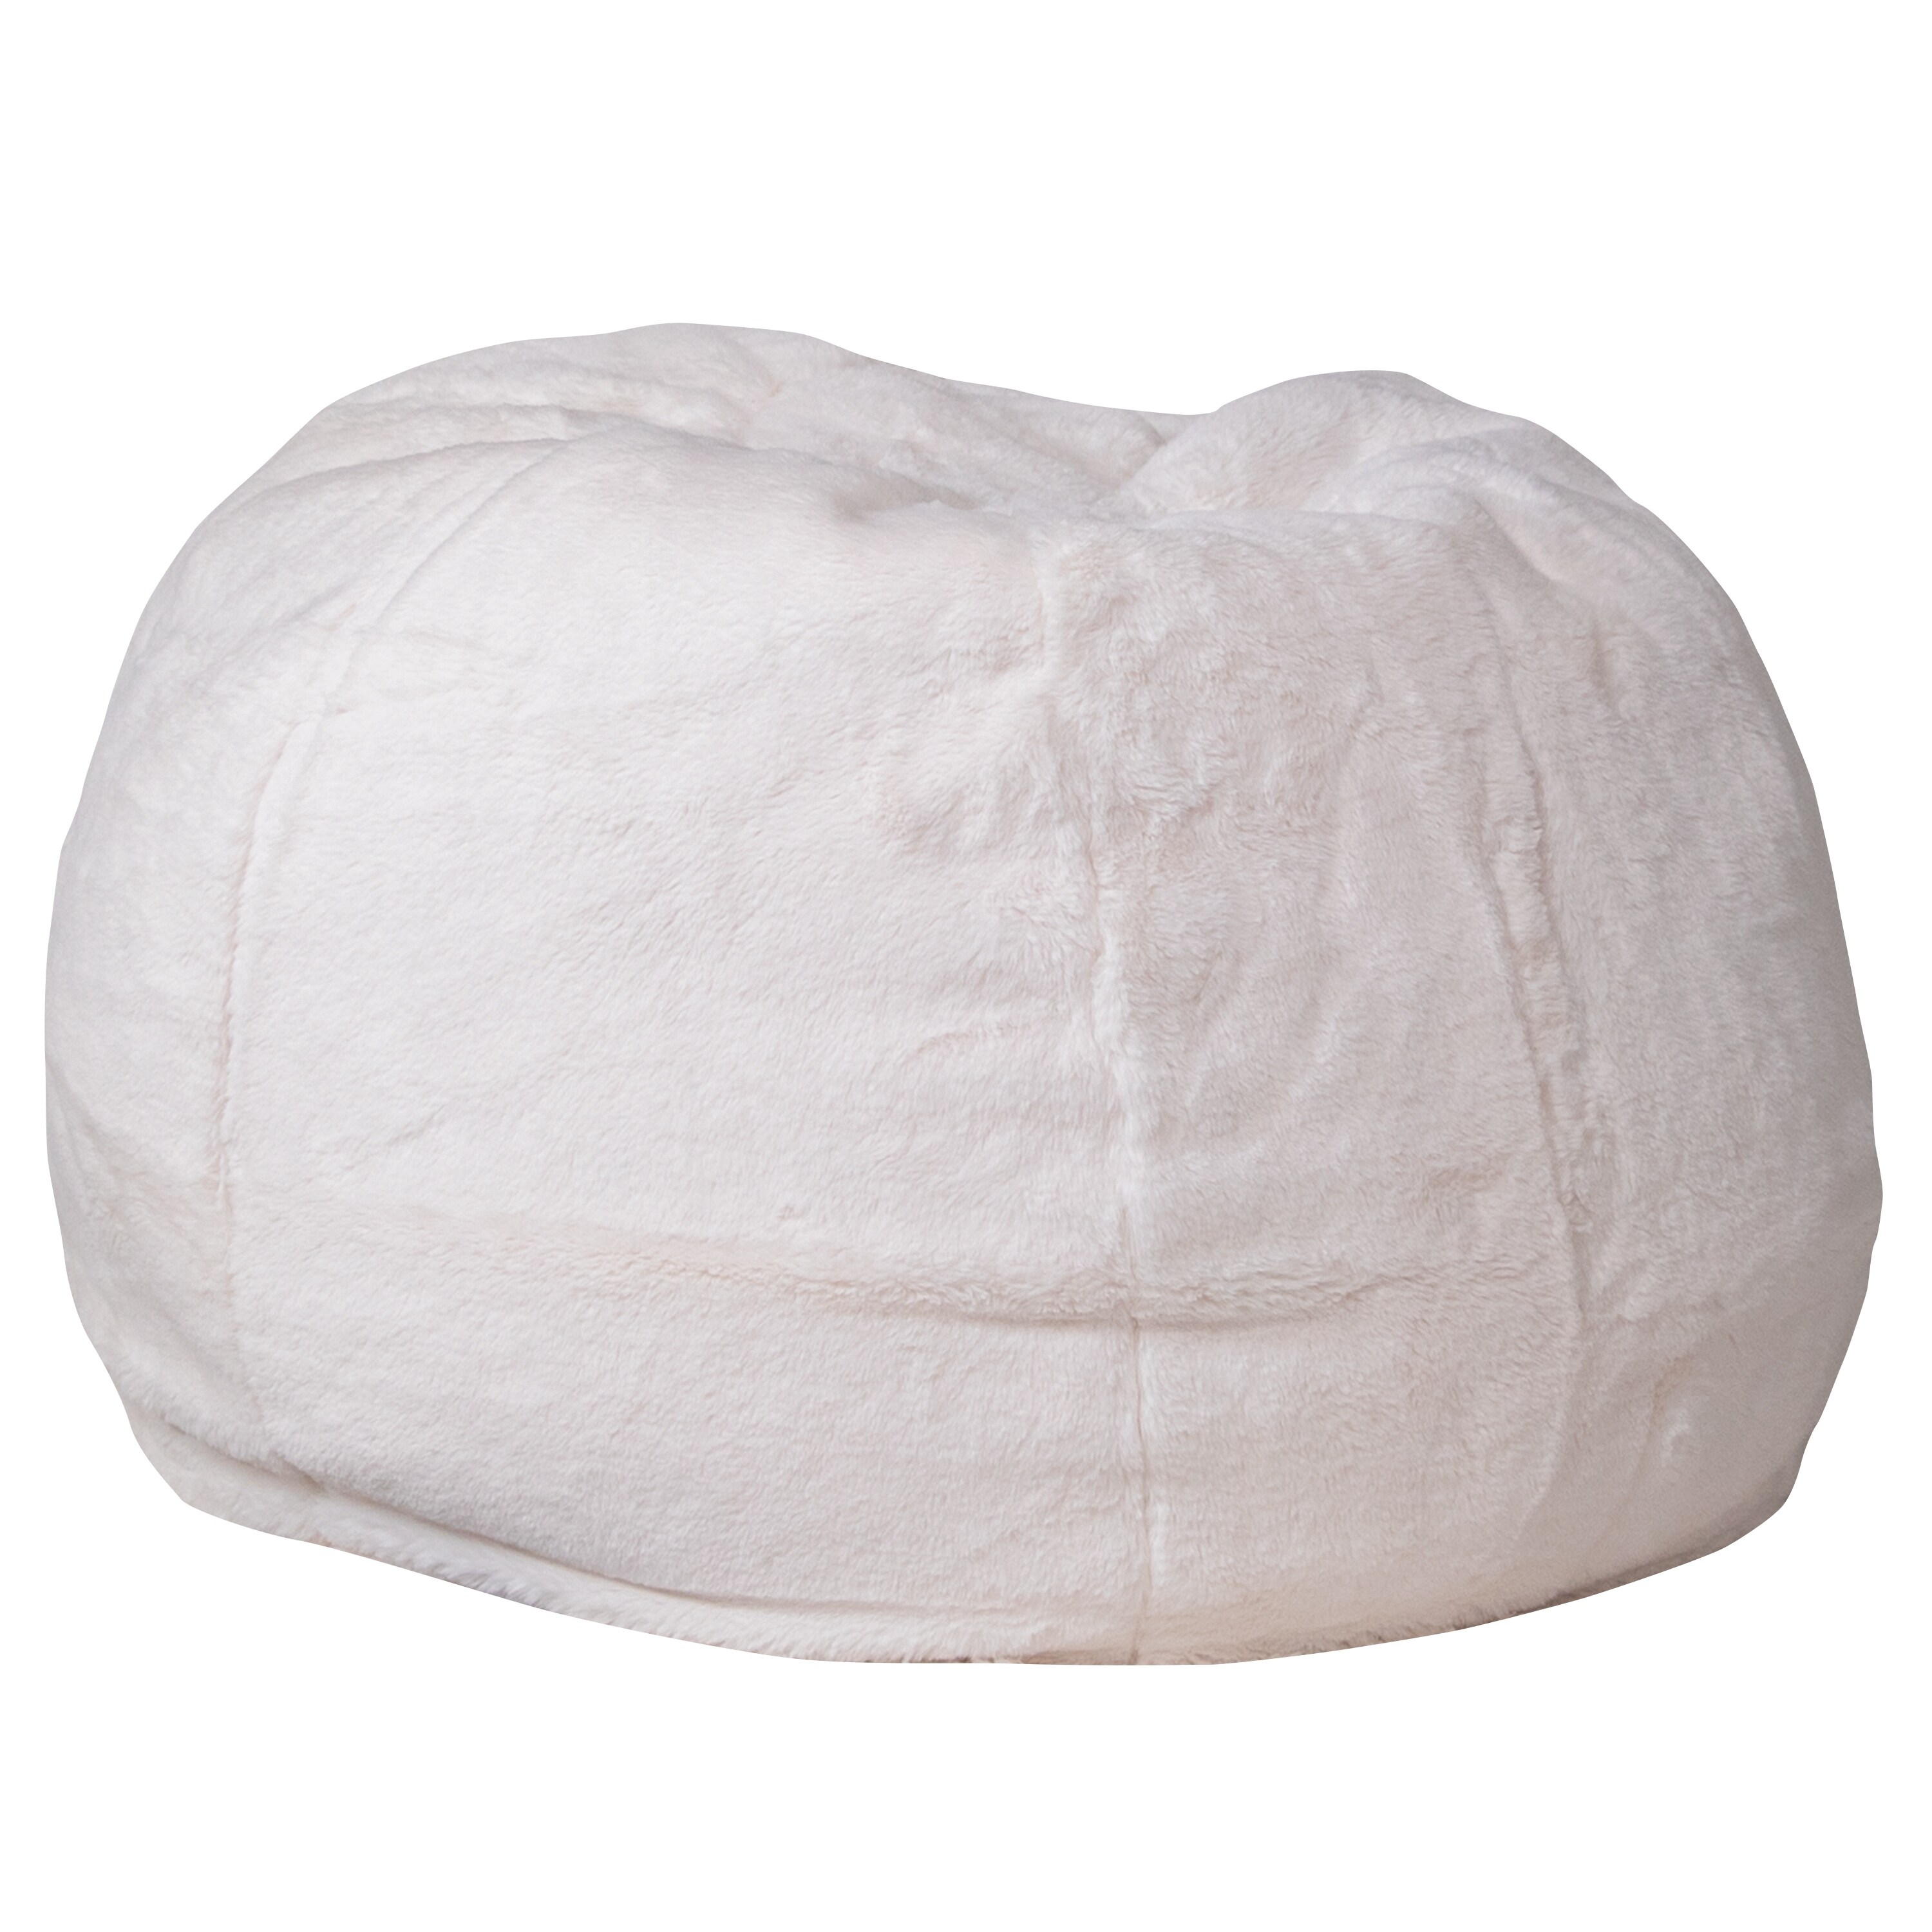 Posh Creations Bean Bag Refill, Premium Cool White EPS Refill